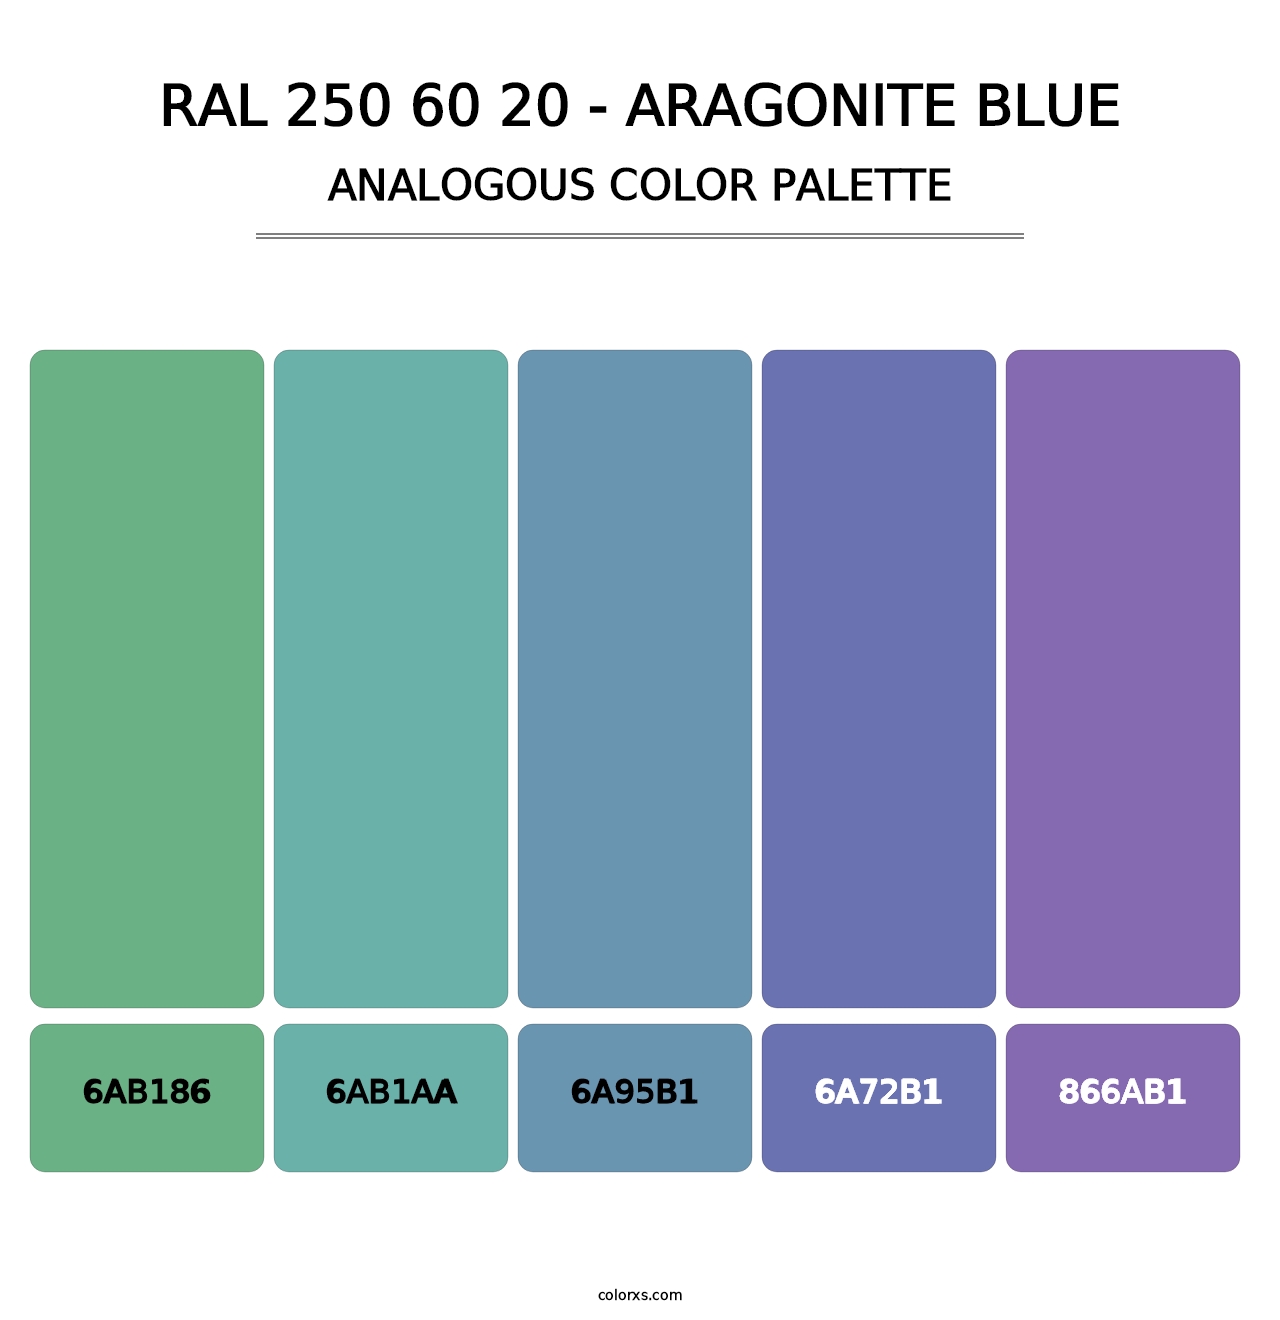 RAL 250 60 20 - Aragonite Blue - Analogous Color Palette